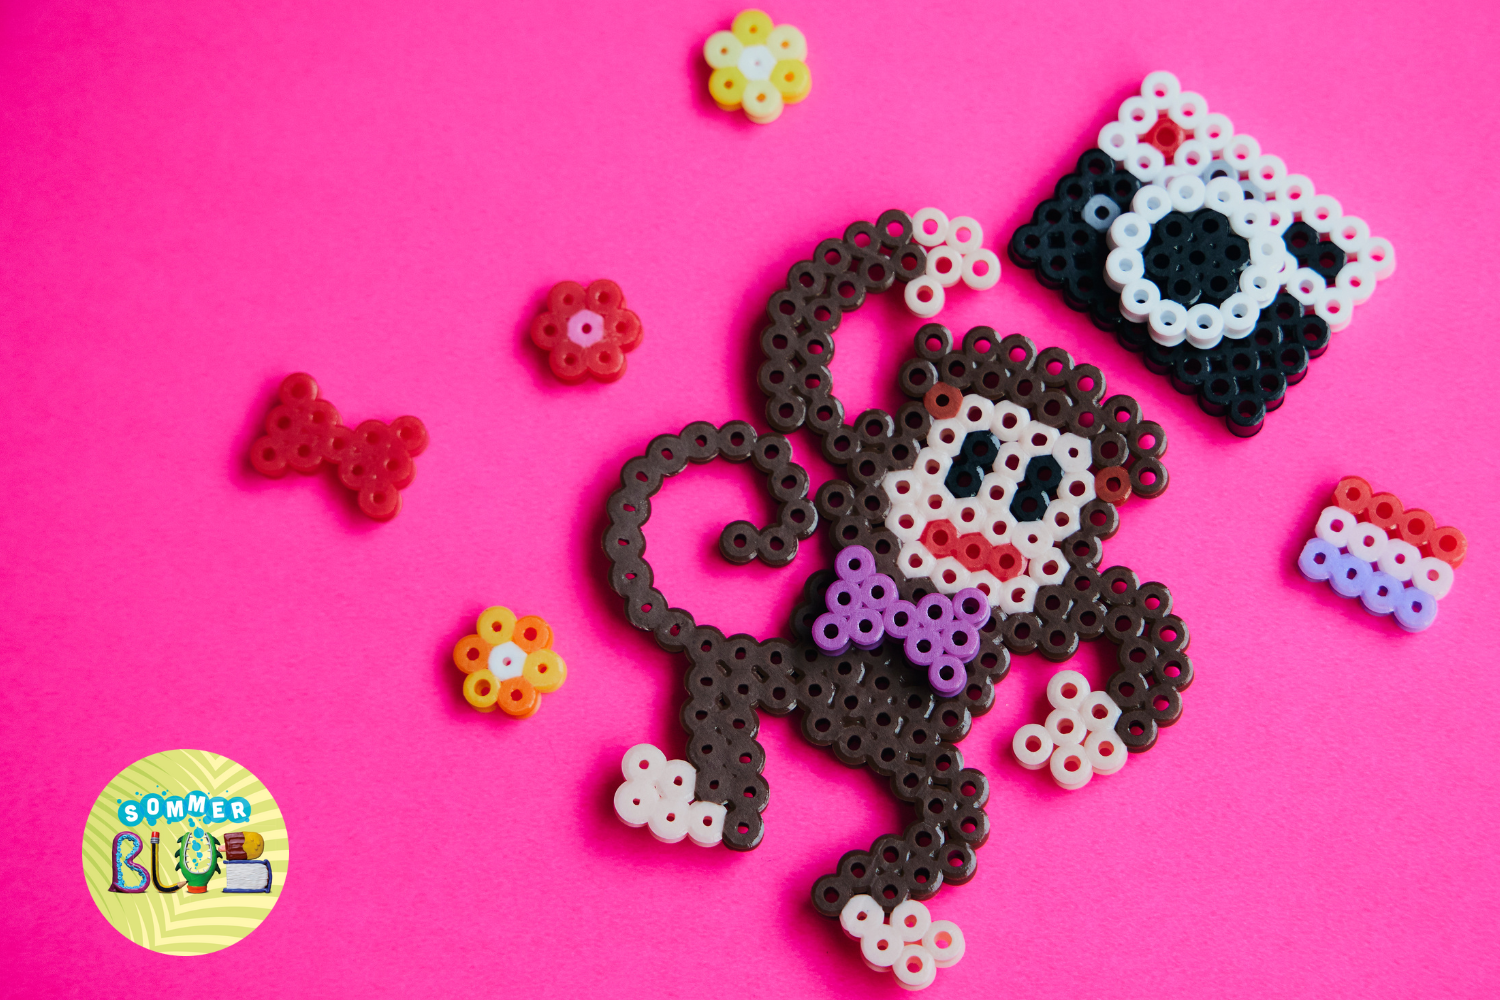 A monkey made of iron beads